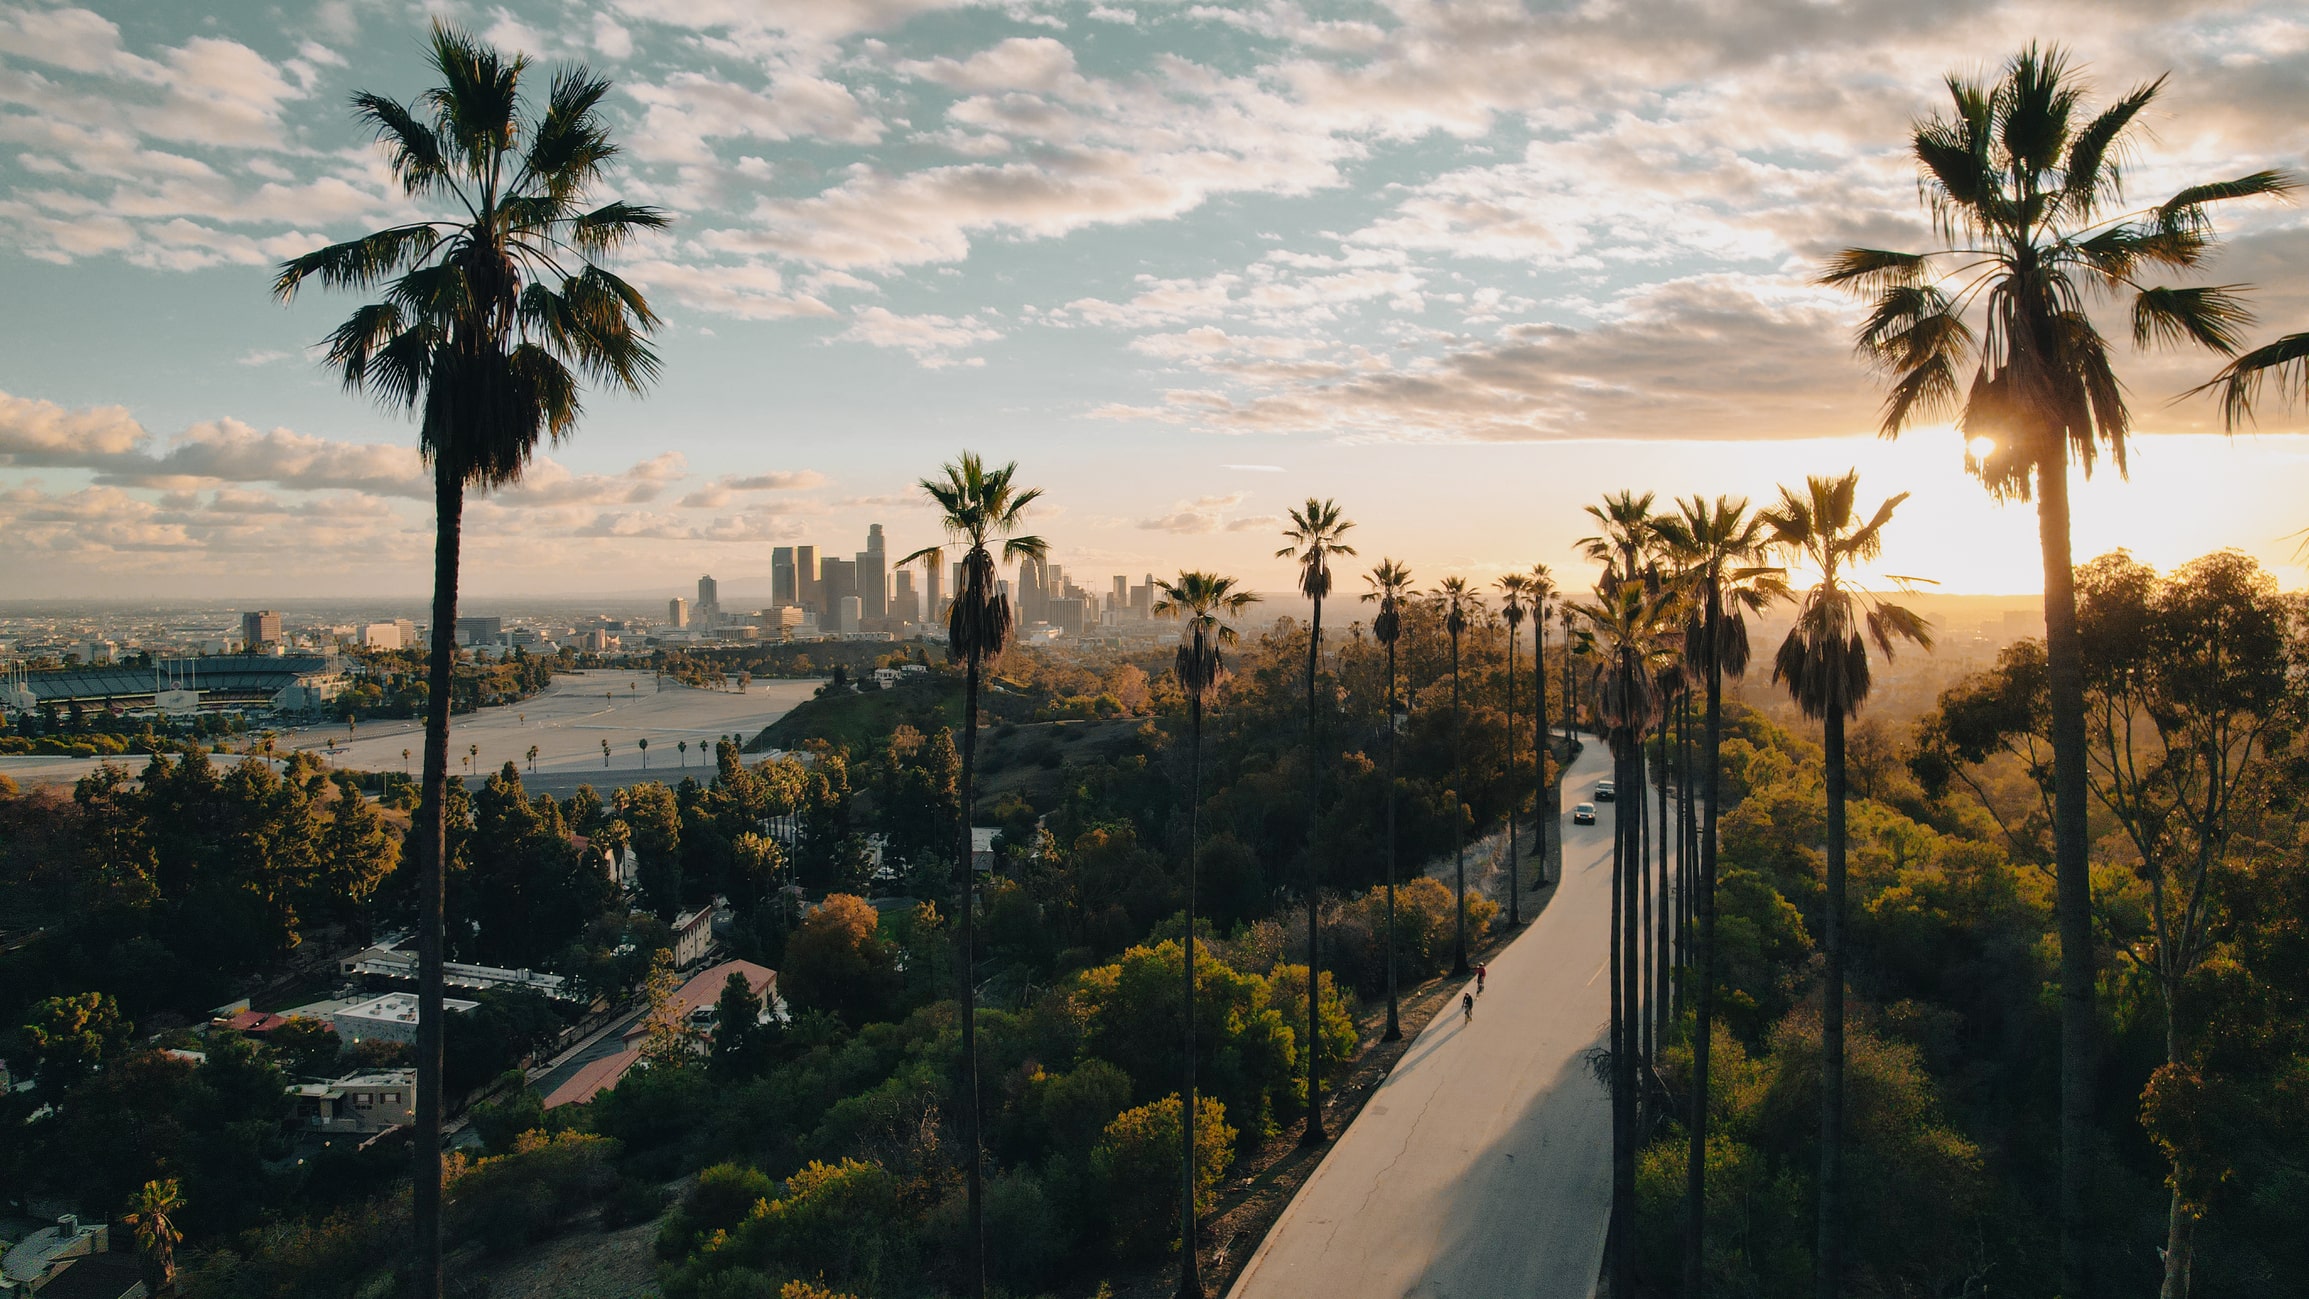 Sunset on palm tree-lined street in LA, California.